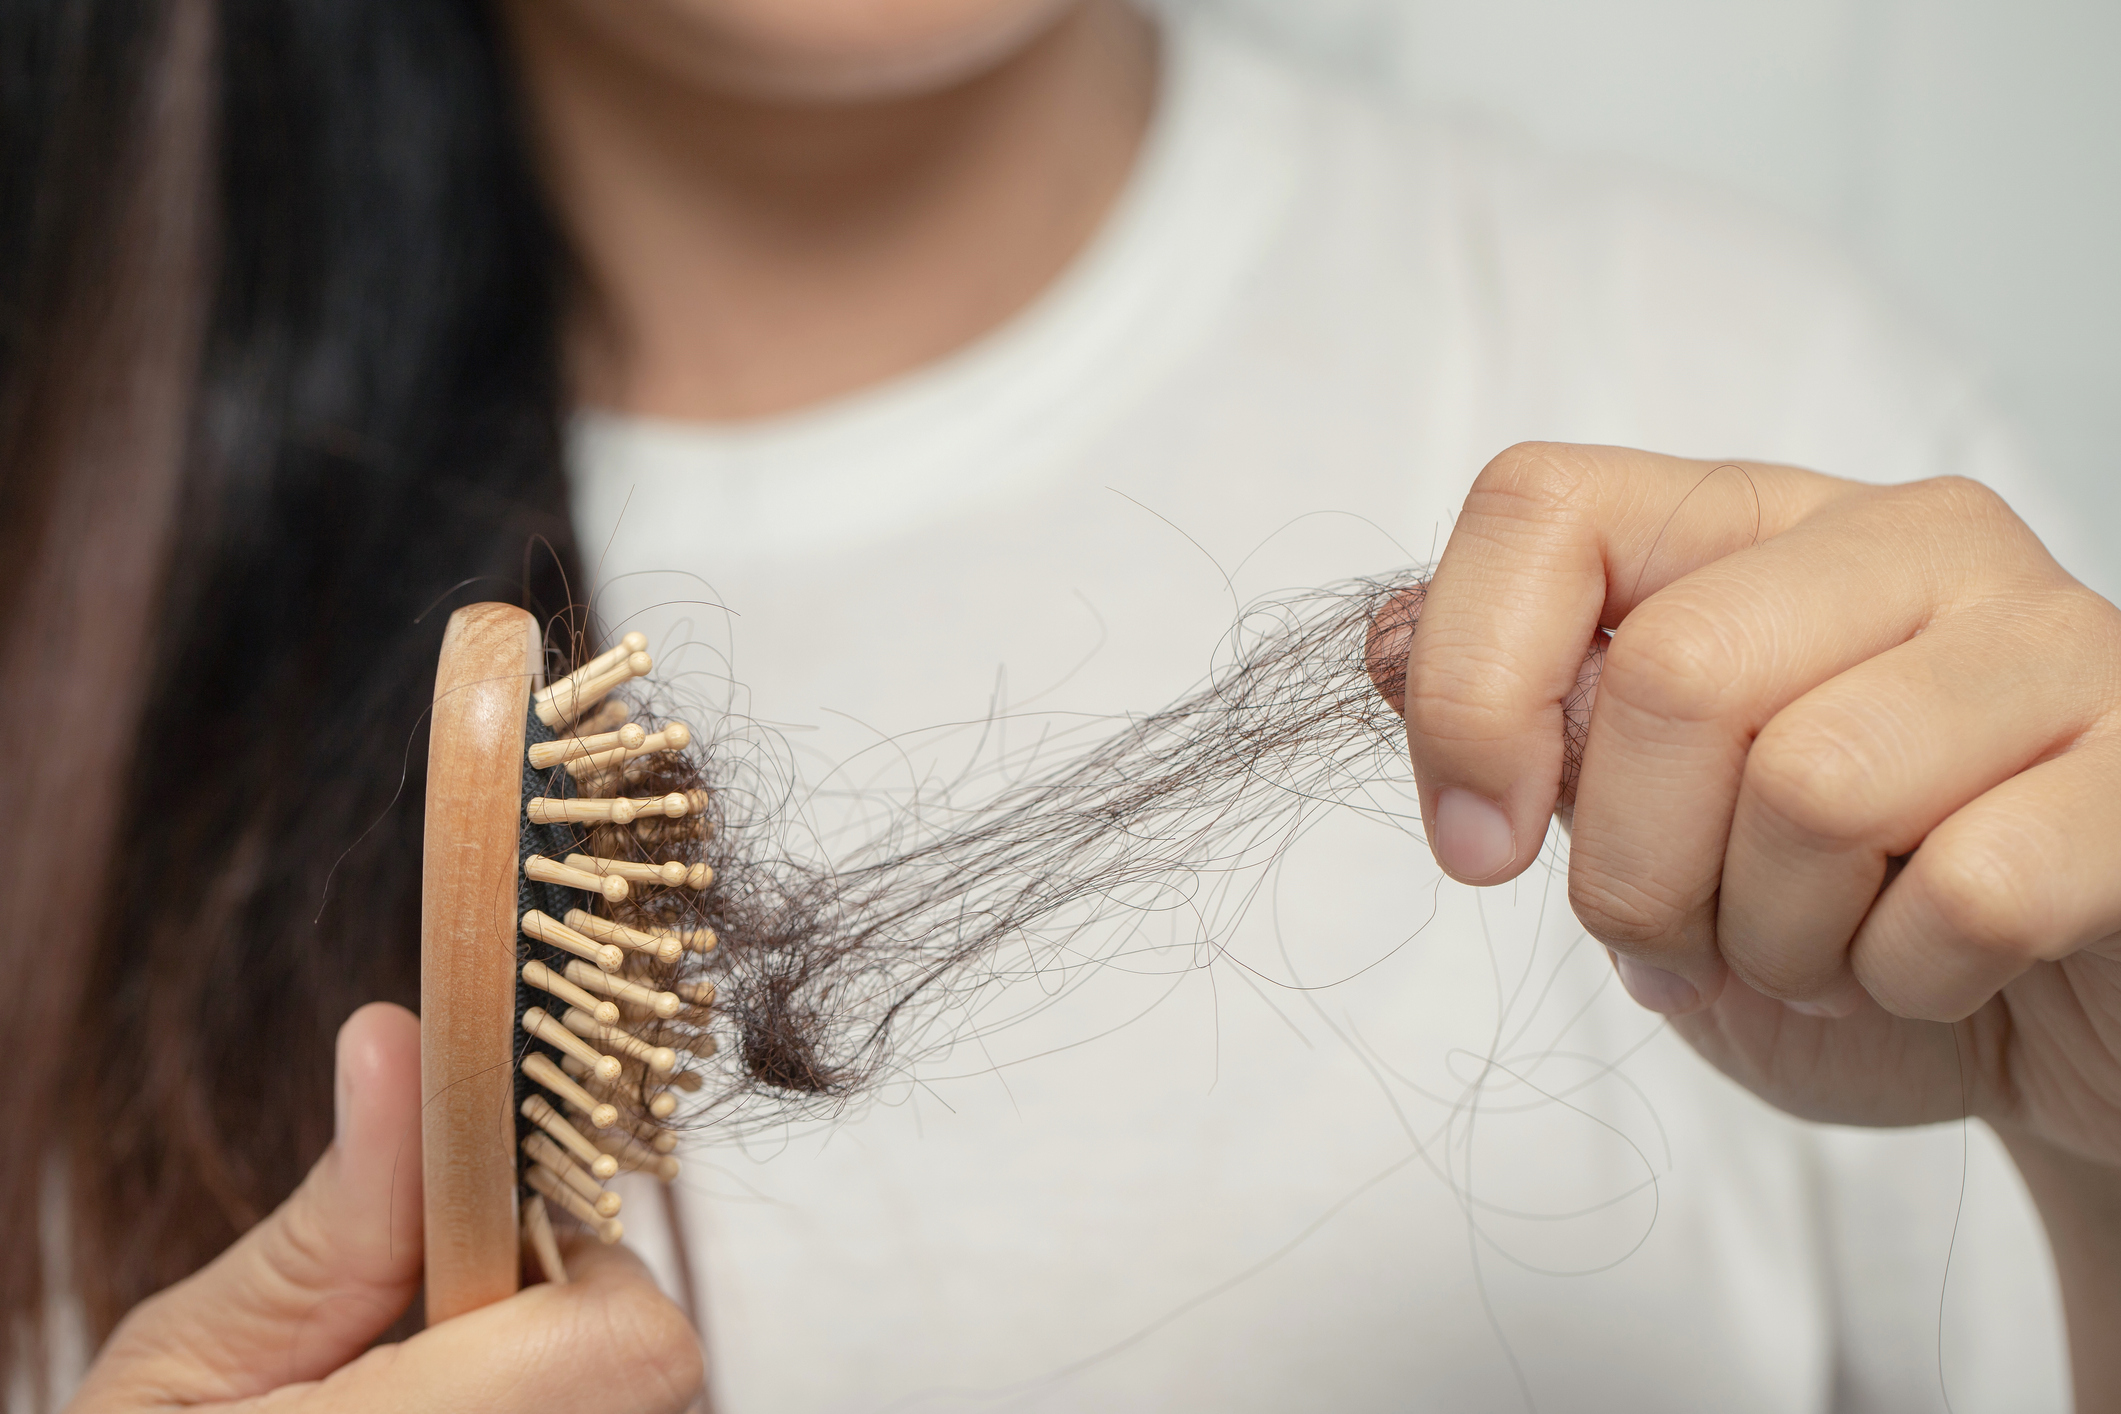 Photograph of woman losing hair in hair brush